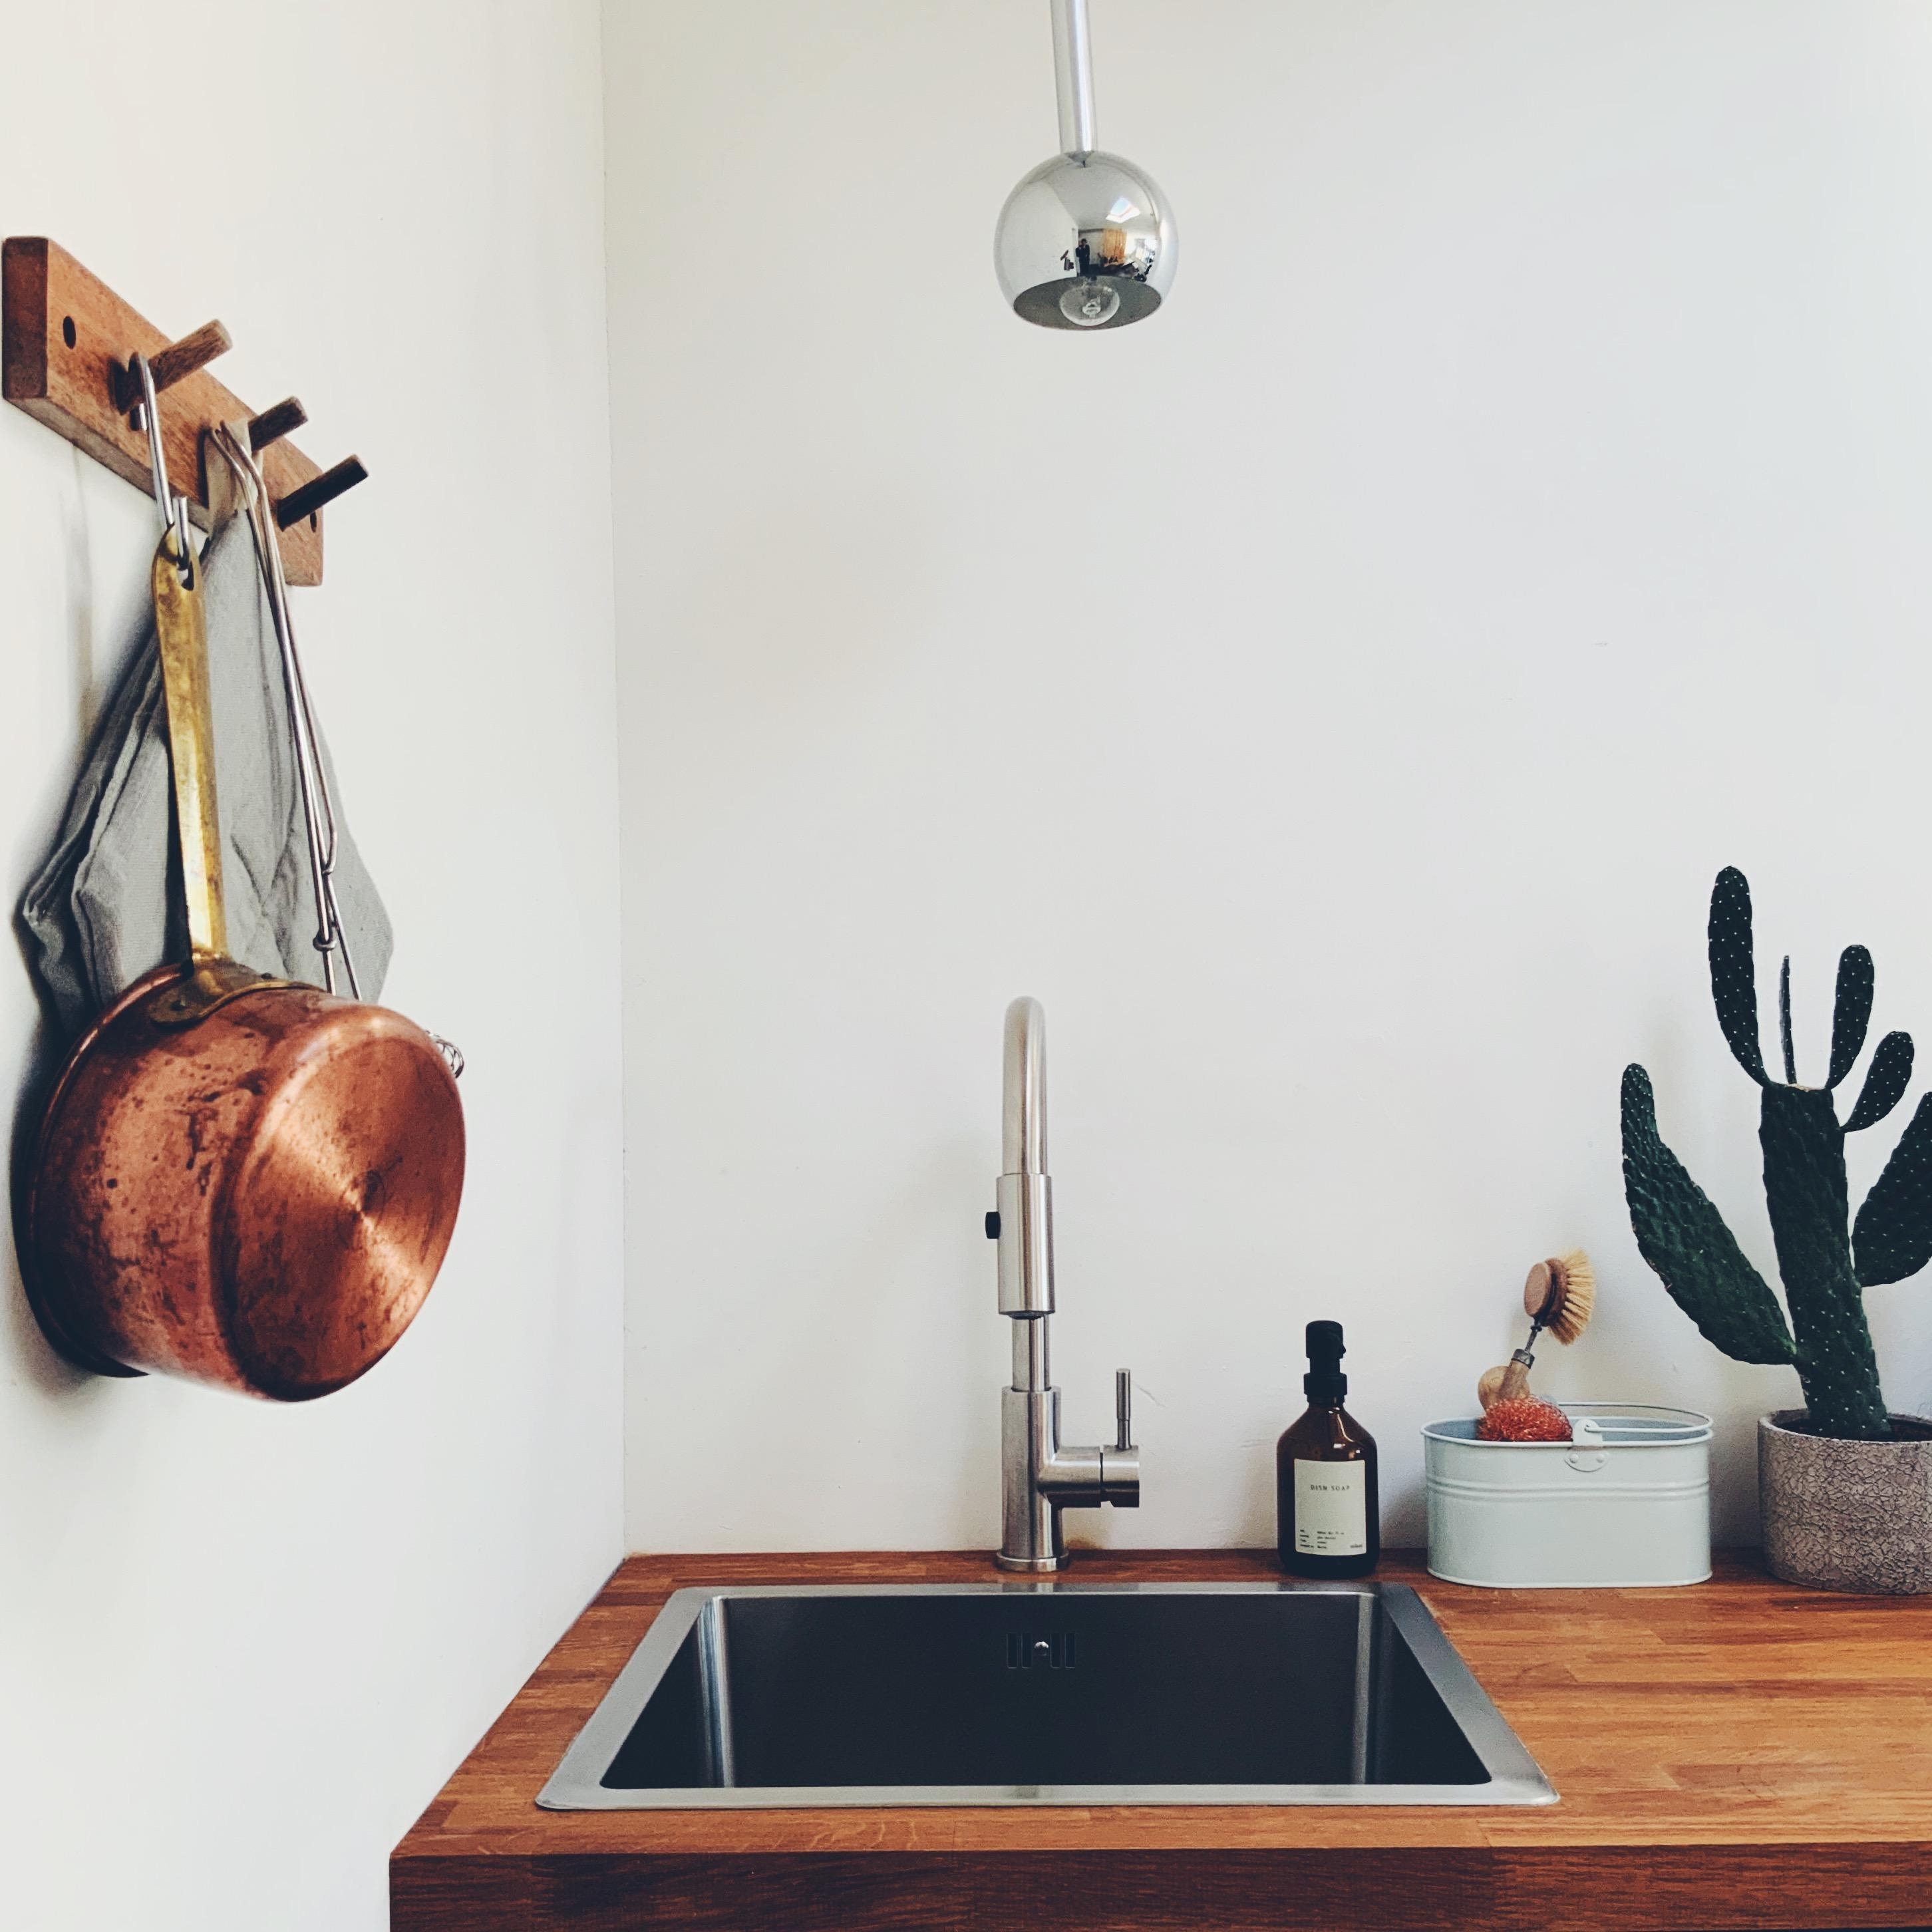 #livingchallenge #haushalt #küche #kaktus #airbnb @tiny_loft_house_cgn